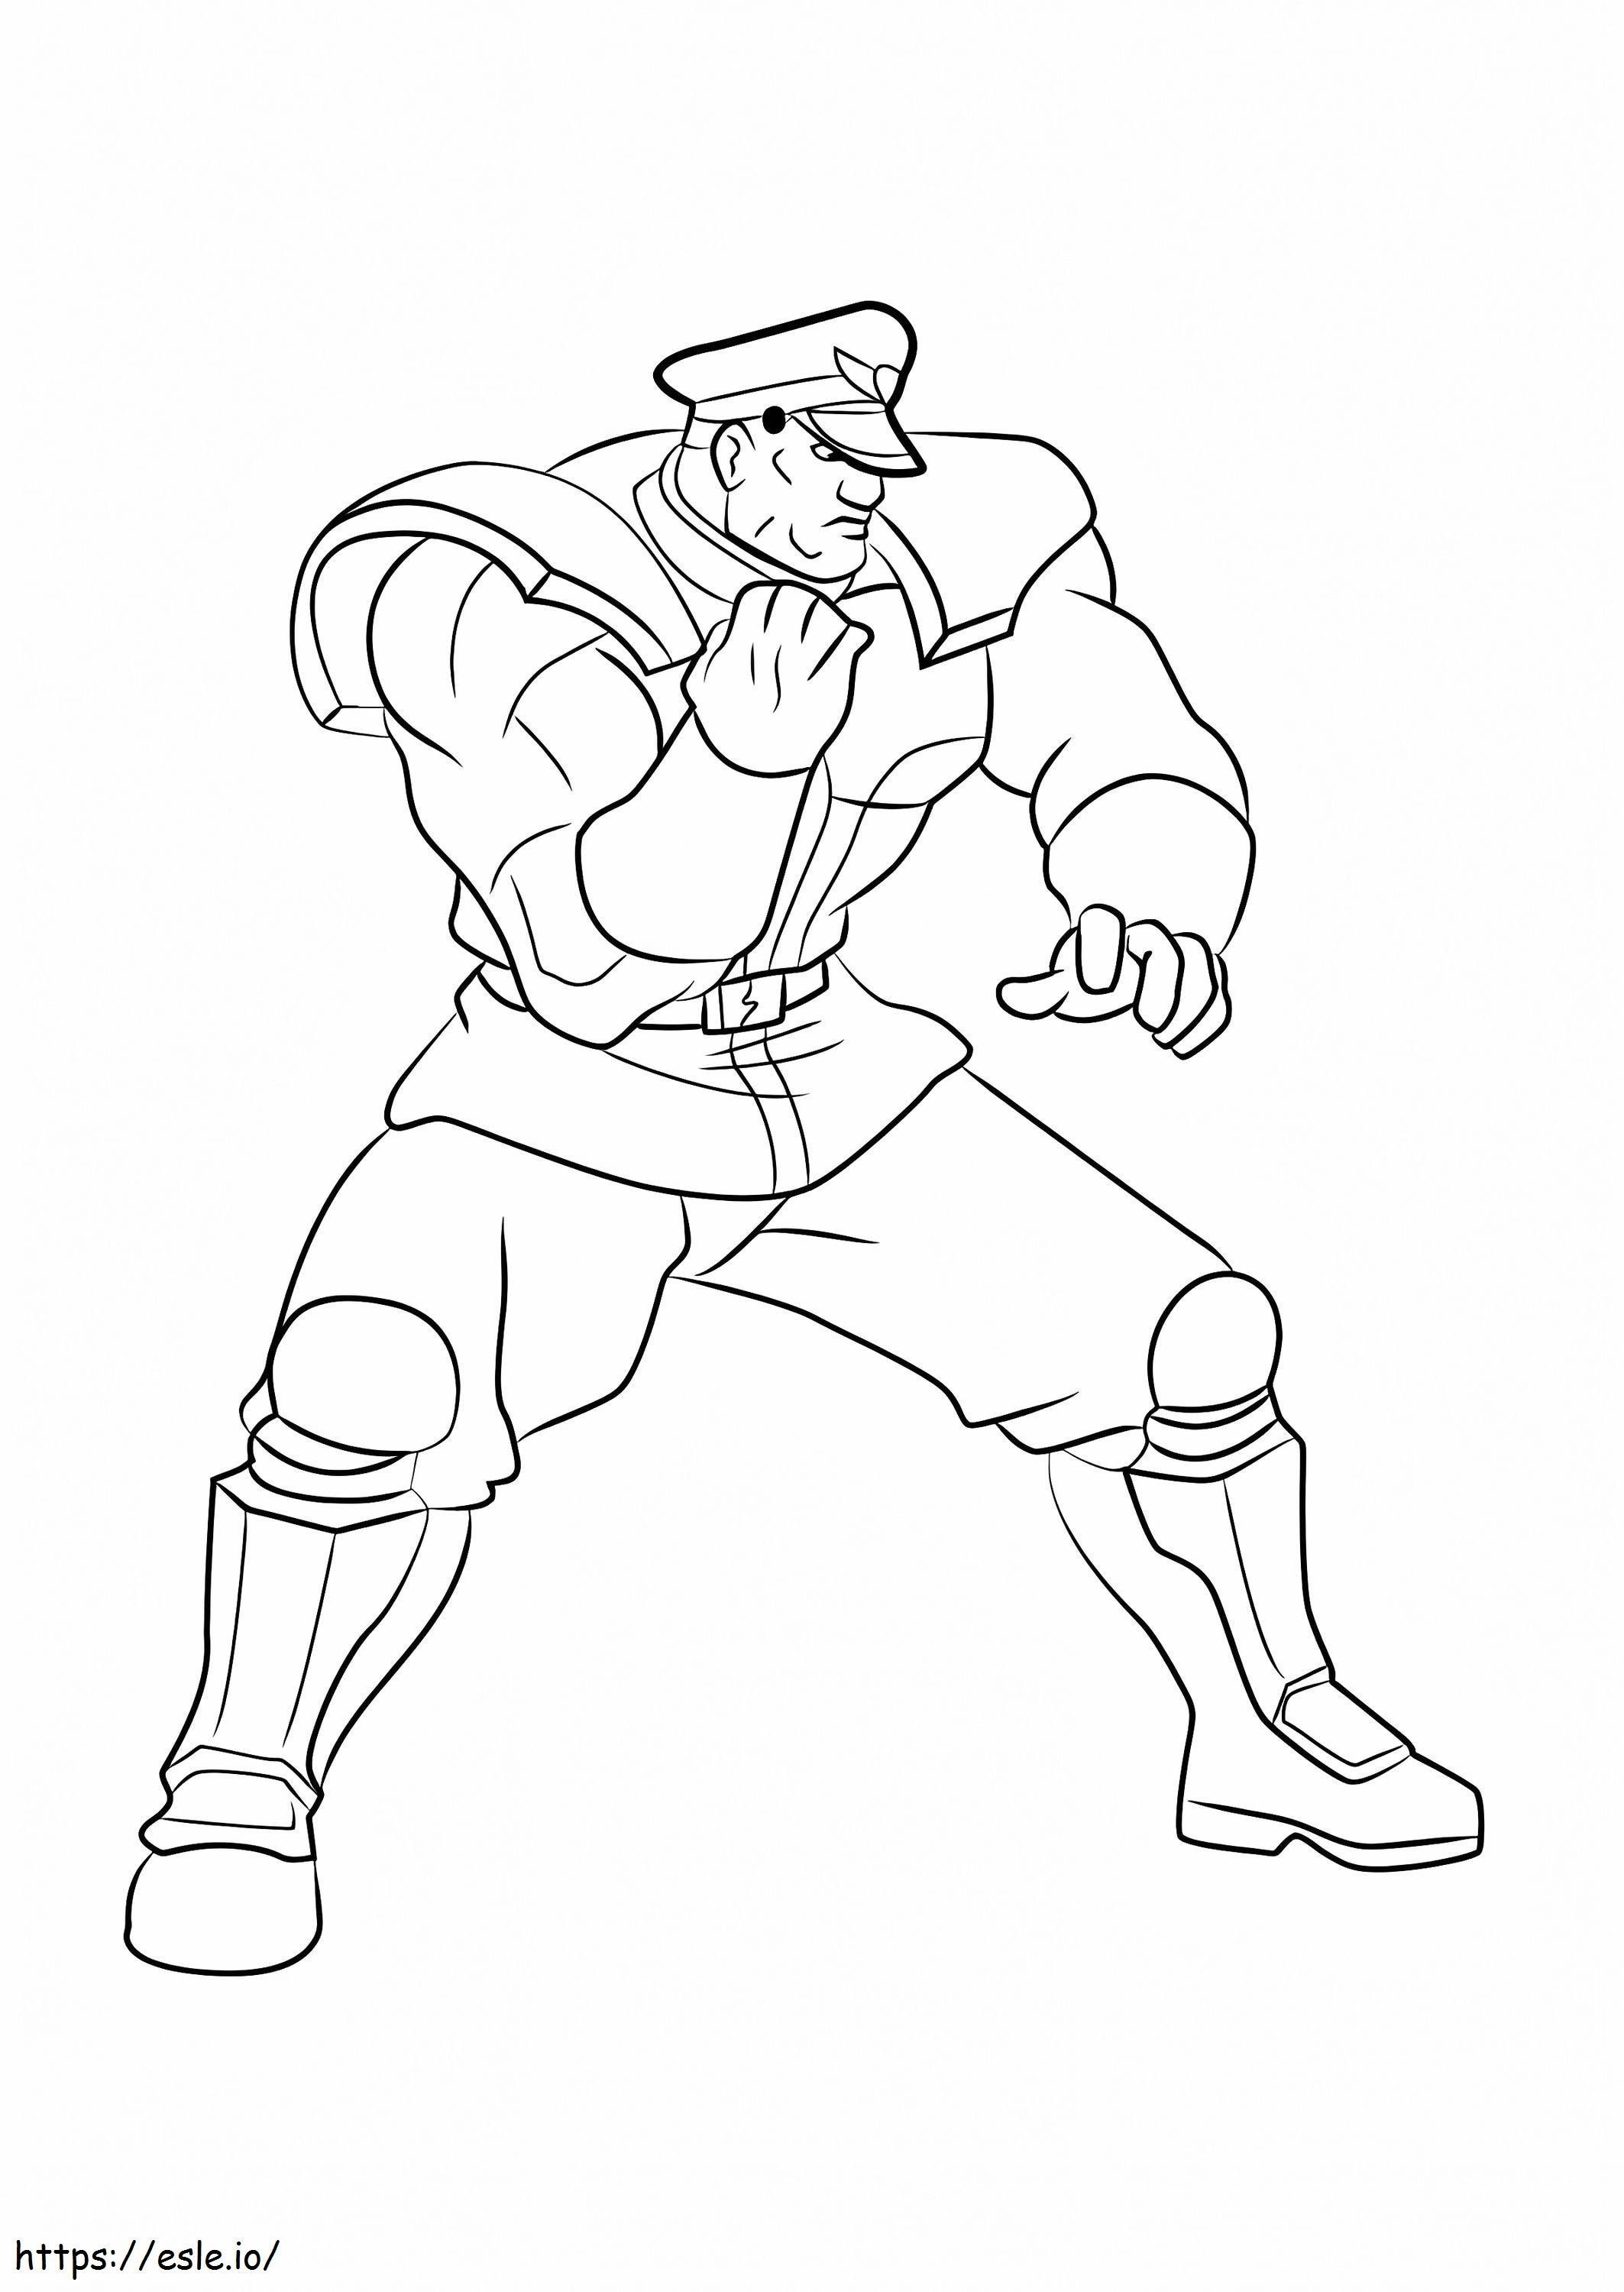 Coloriage M. Bison de Street Fighter à imprimer dessin